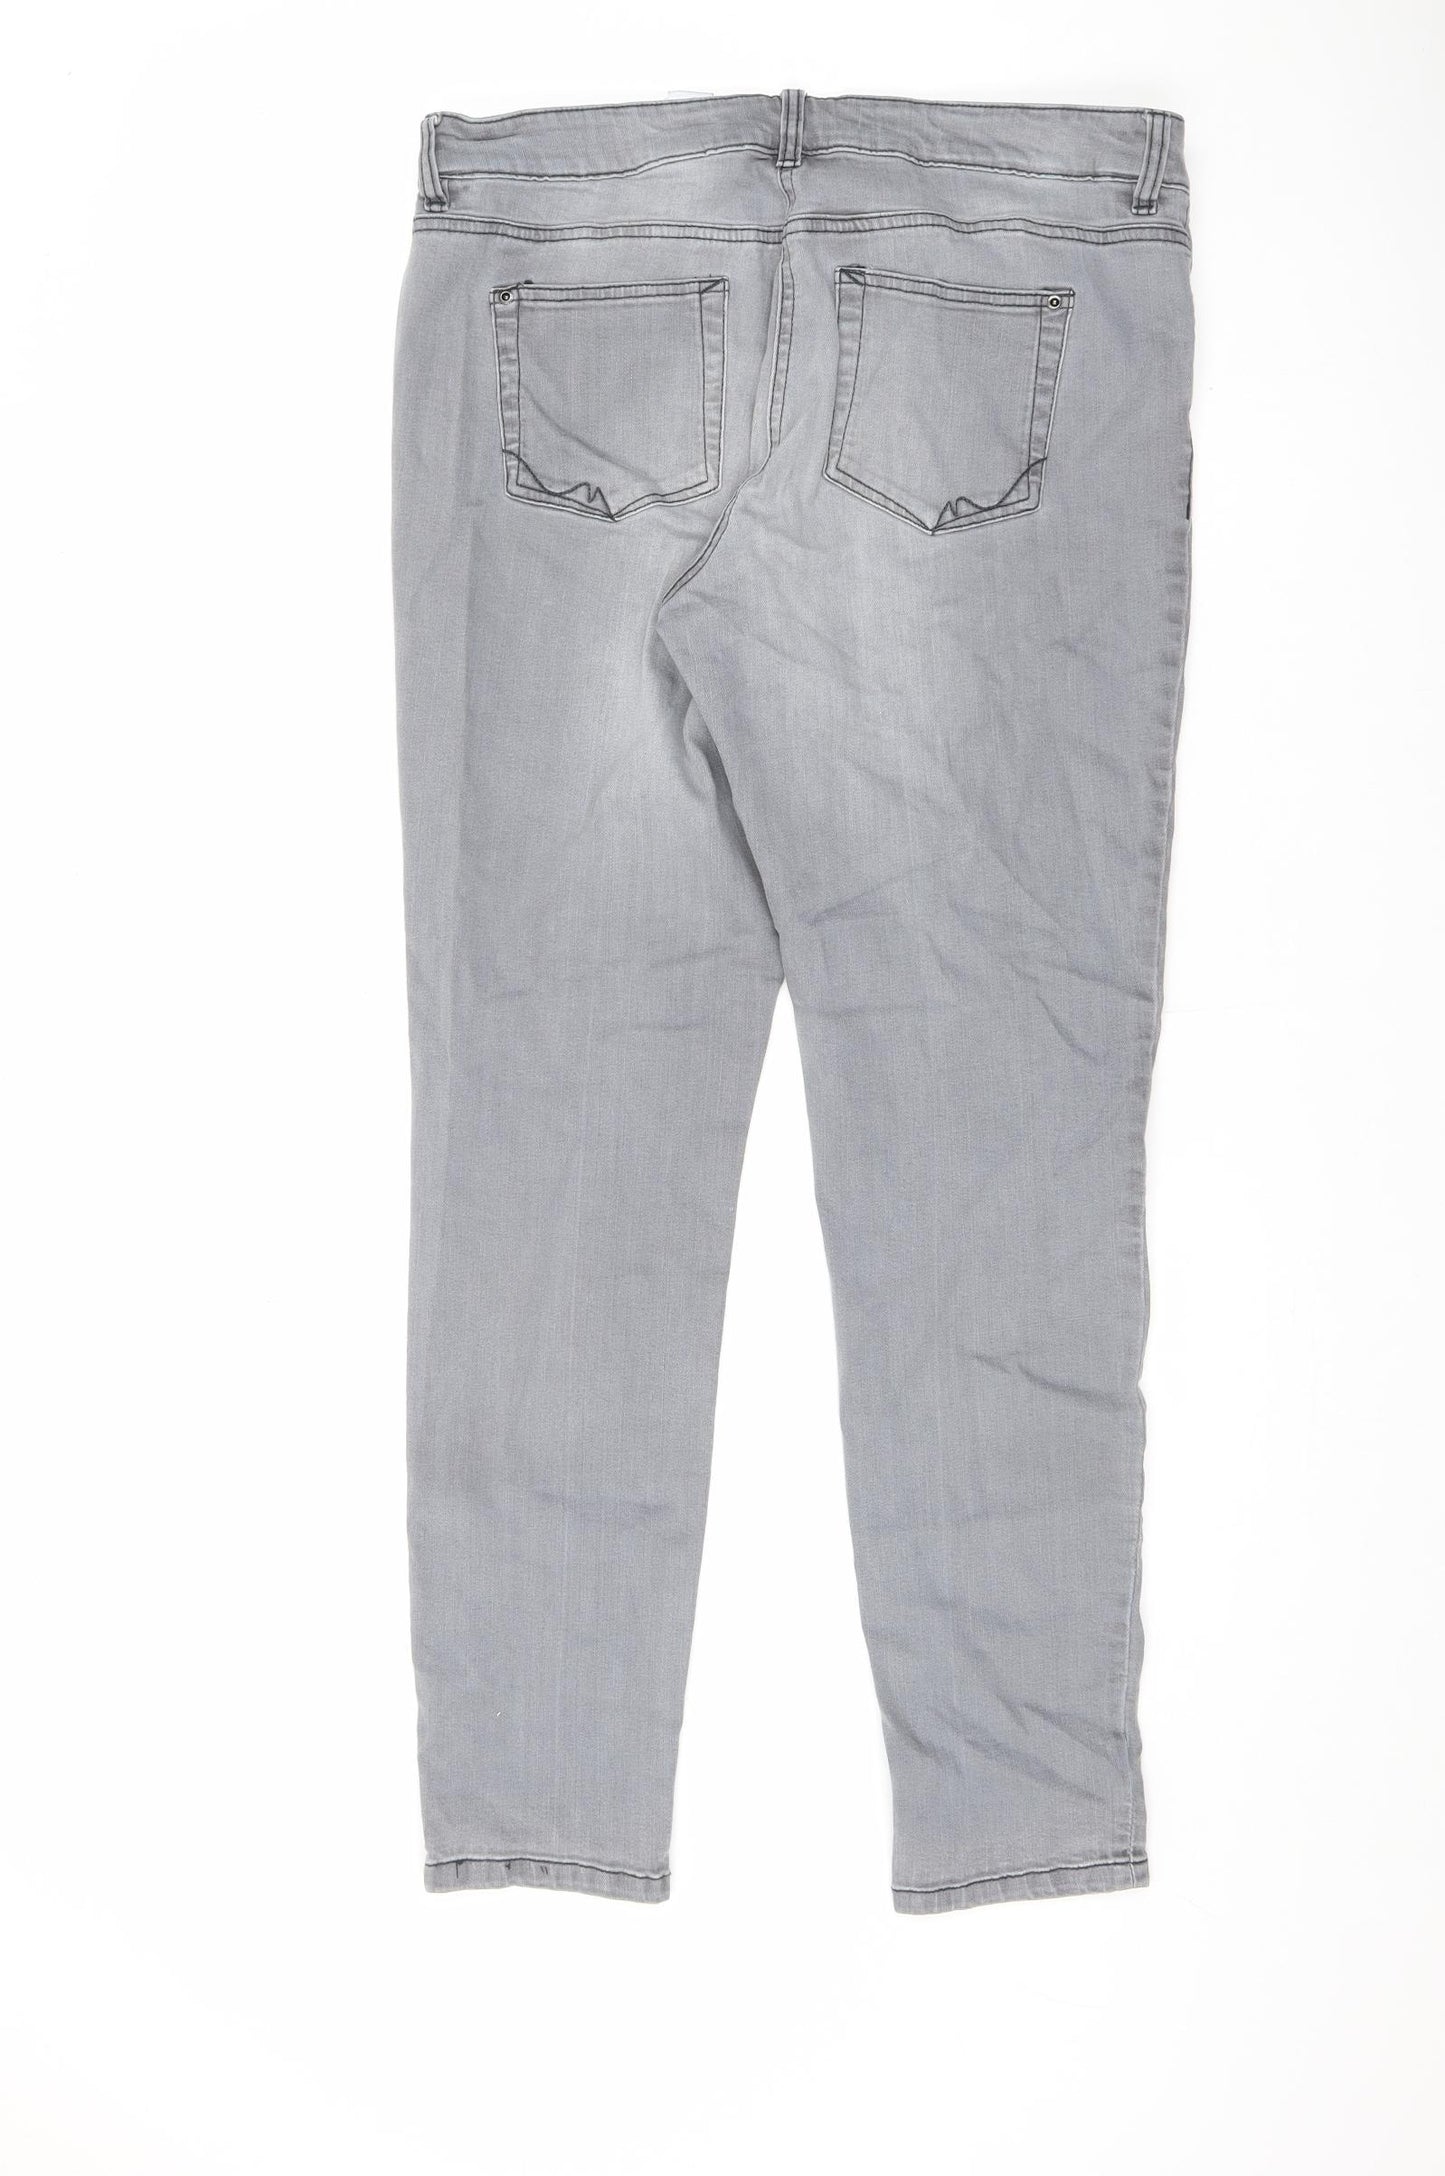 NEXT Womens Grey Cotton Skinny Jeans Size 14 L29 in Regular Zip